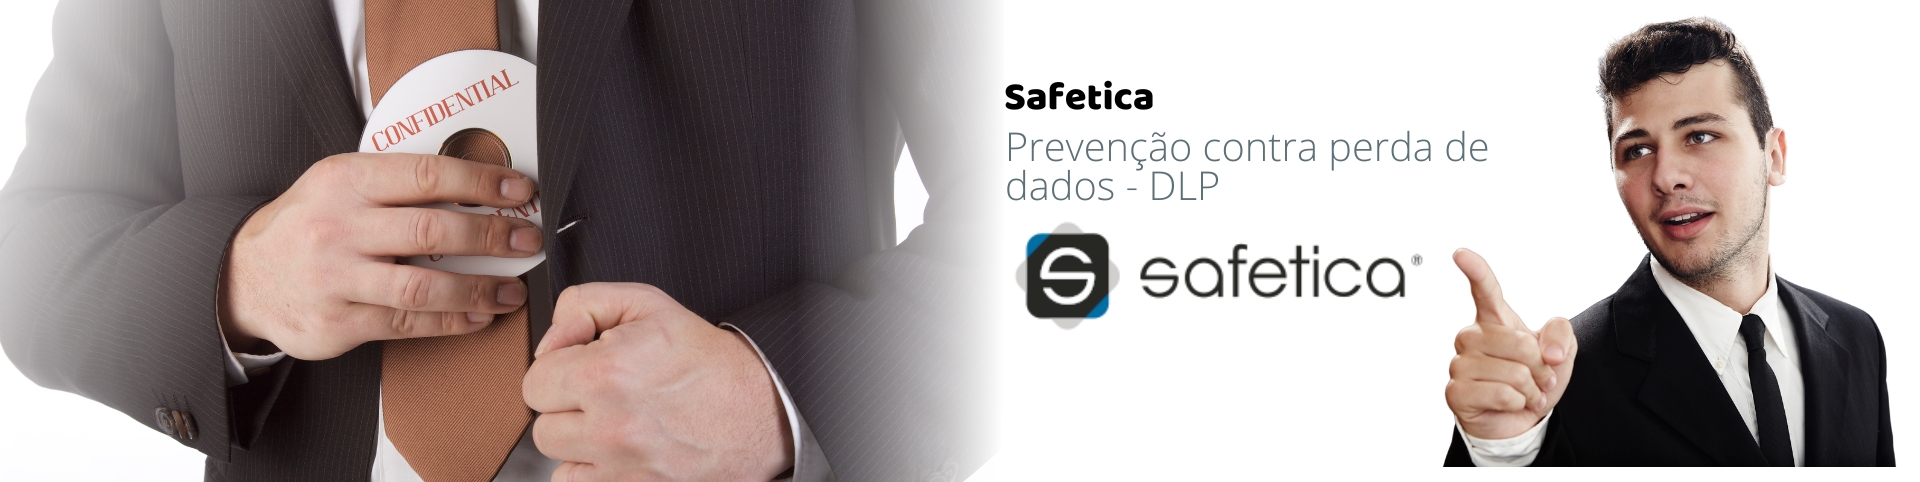 NetSol_Safetica